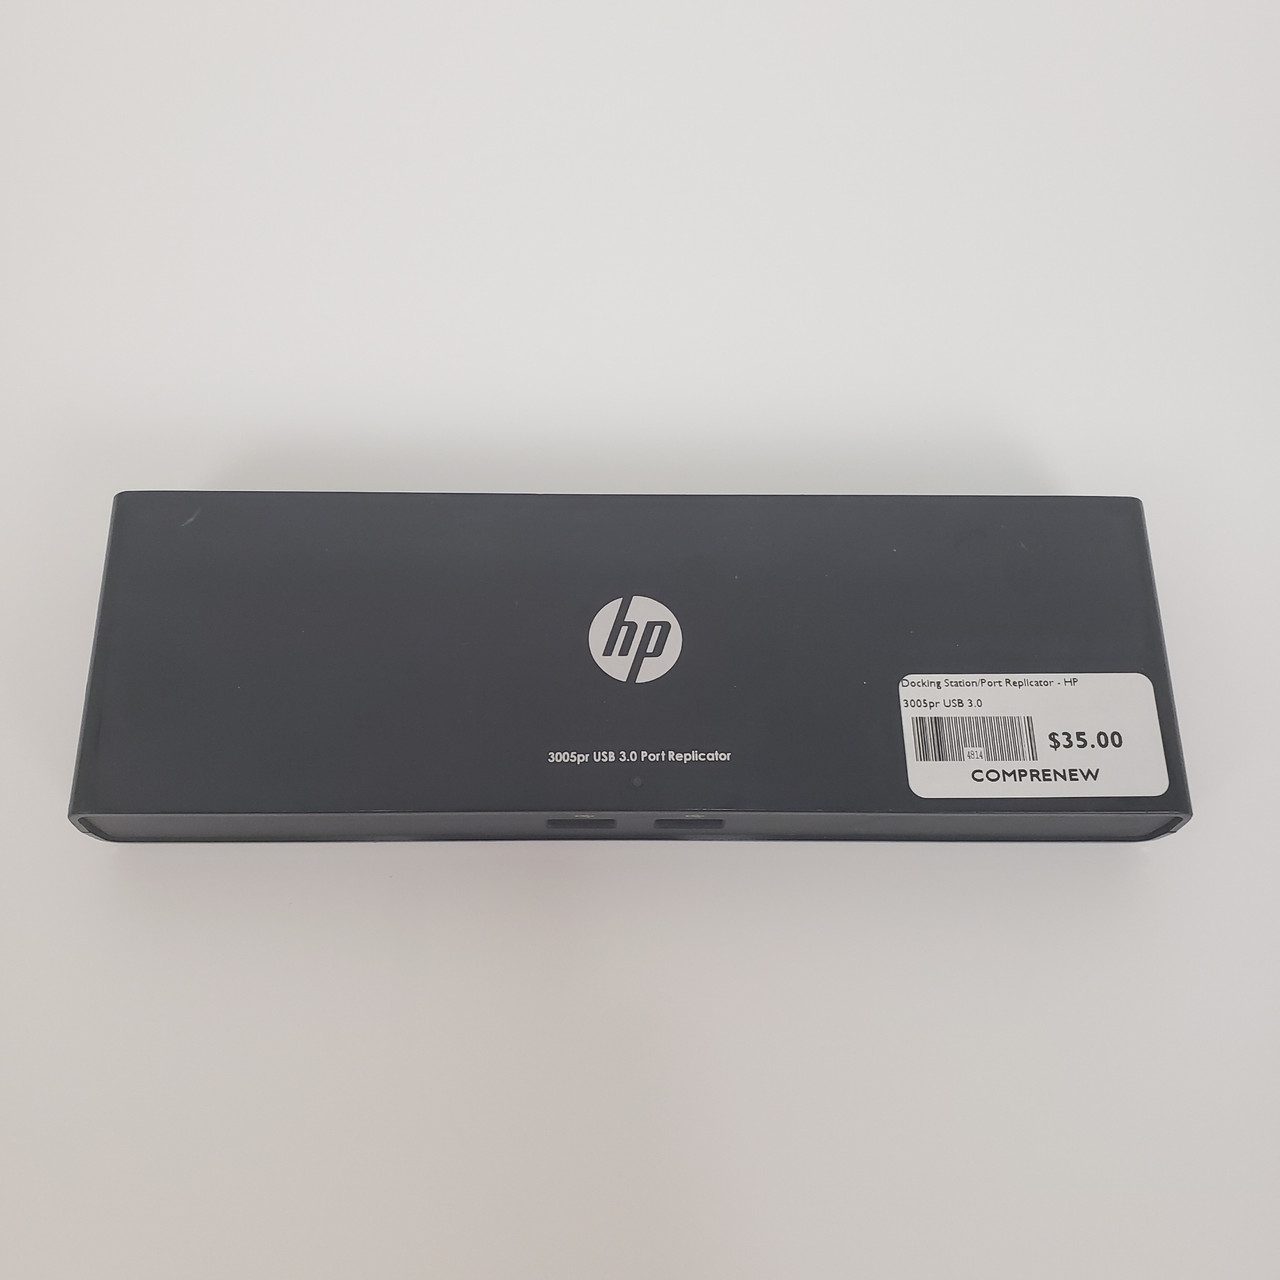 HP 3005pr USB 3.0 Docking Station